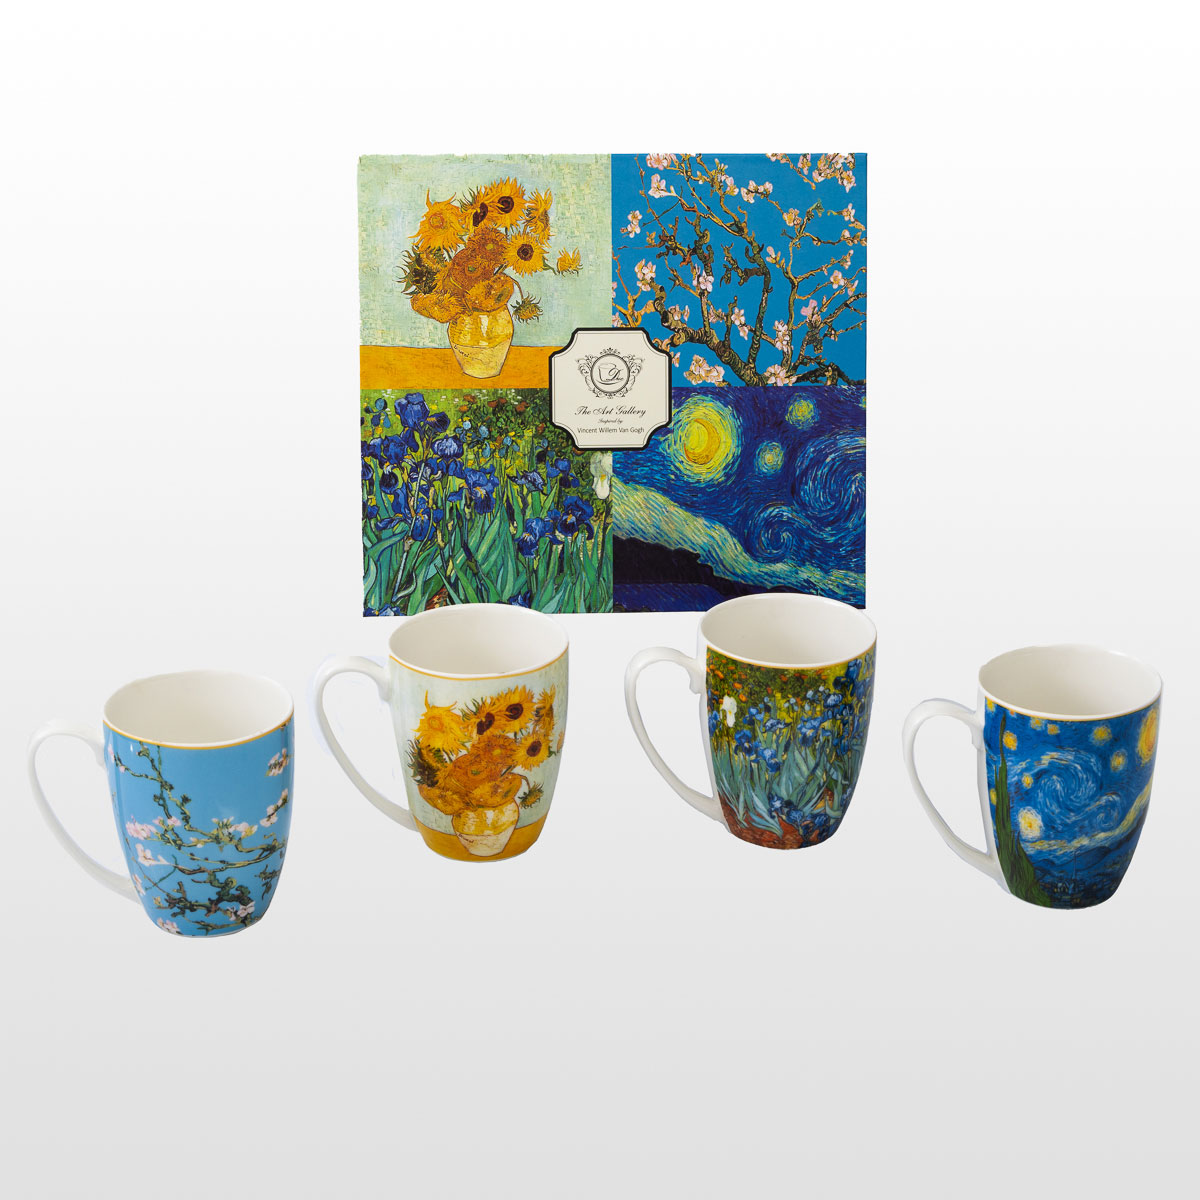 4 tazze Vincent Van Gogh (in una scatola regalo), dettaglio n°1